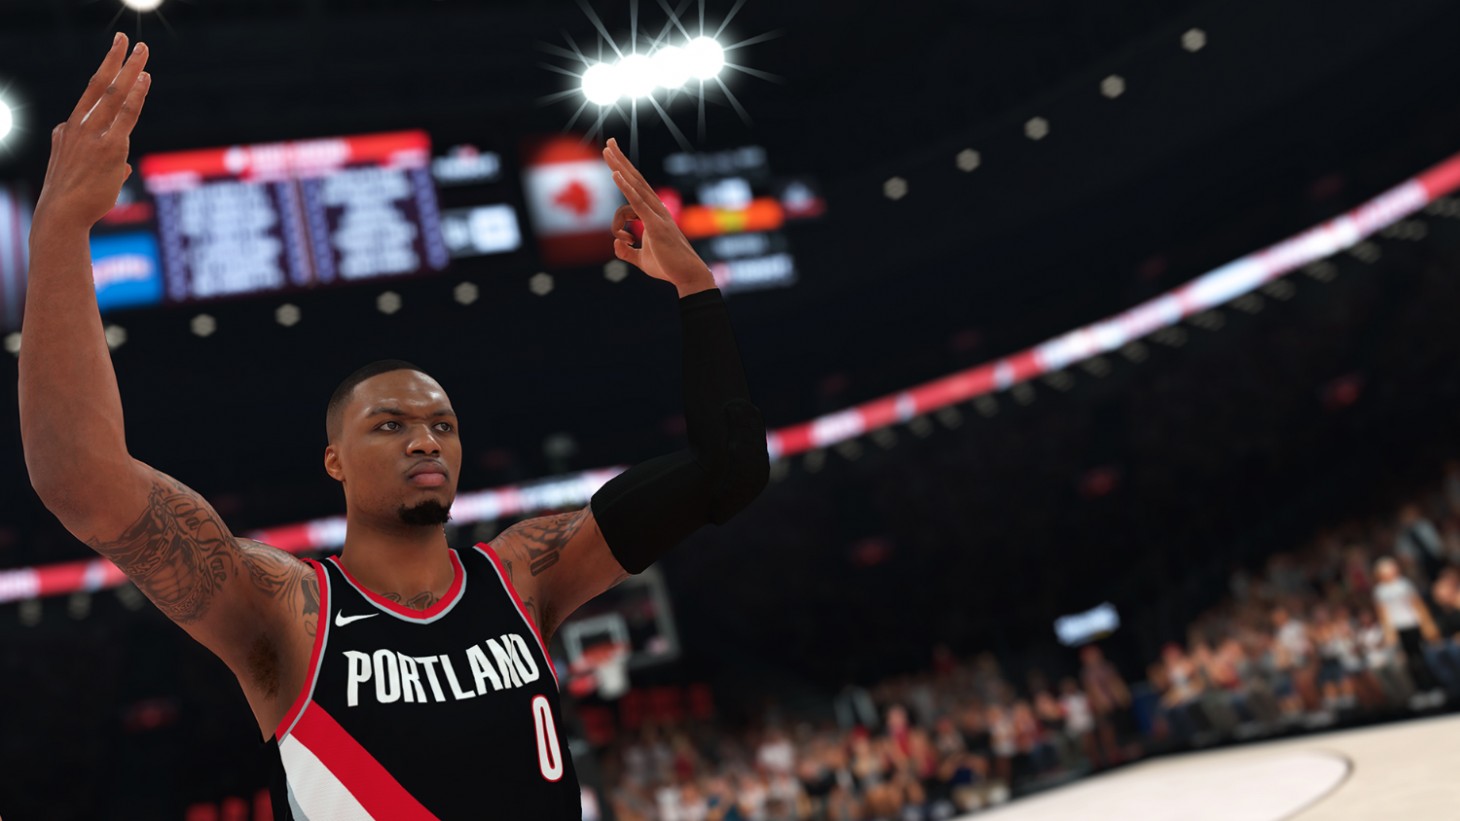 《NBA 2K19》成为系列销量冠军 游戏支出上涨140%